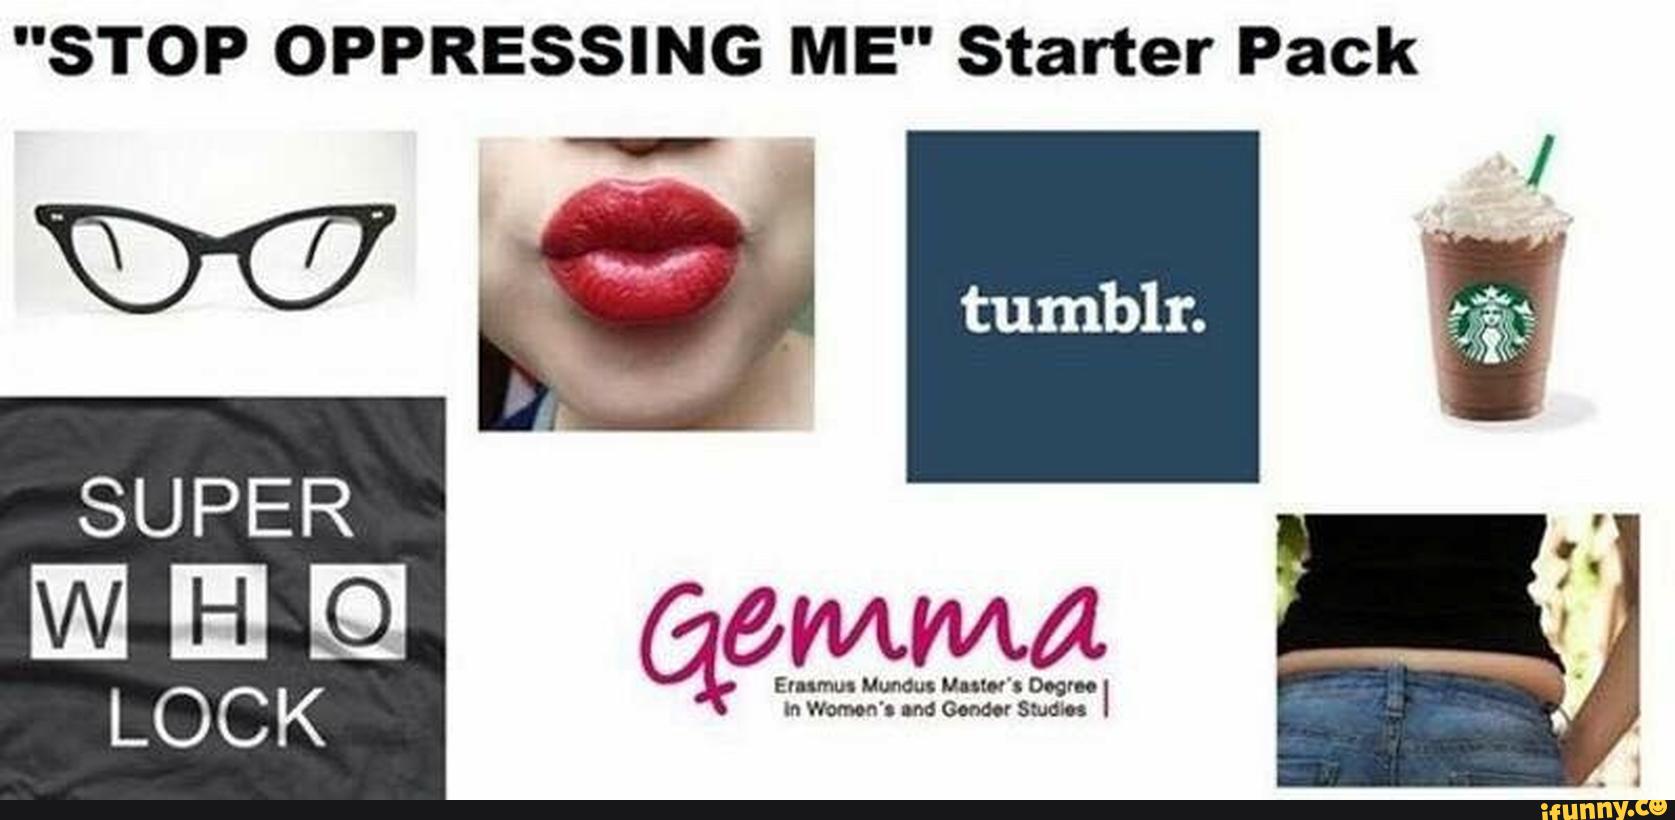 memes - gender studies starter pack - "Stop Oppressing Me" Starter Pack tumblr. Super Who Gemma Lock Erasmus Mundus Master's Degree in Women's and Condor Studios ifunny.co